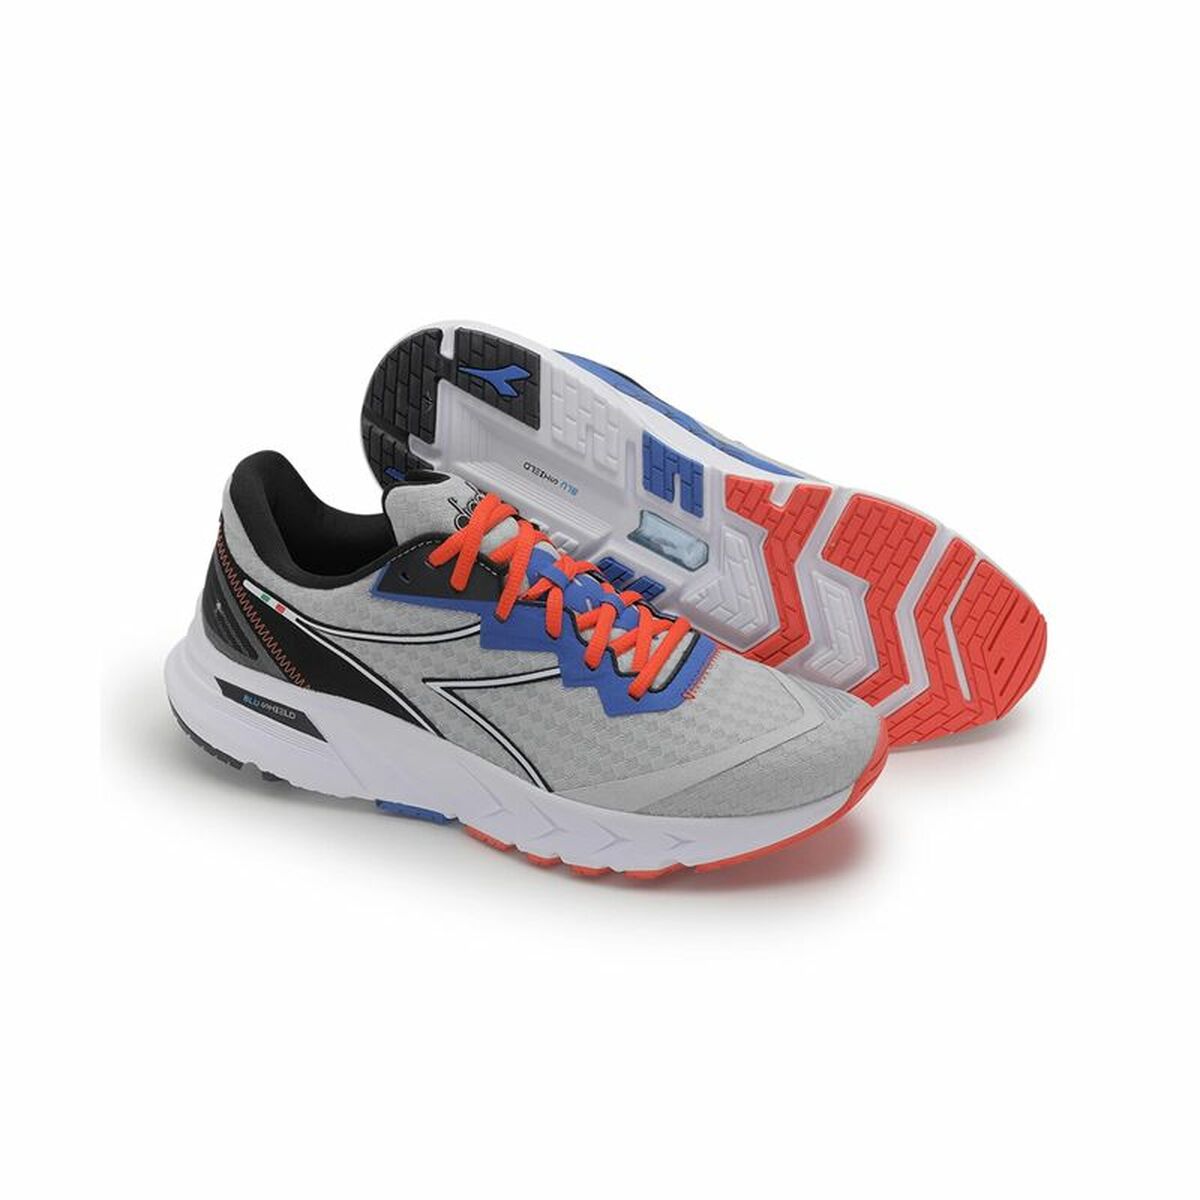 Running Shoes for Adults Diadora Mythos Blushield Volo 2 Men Light grey